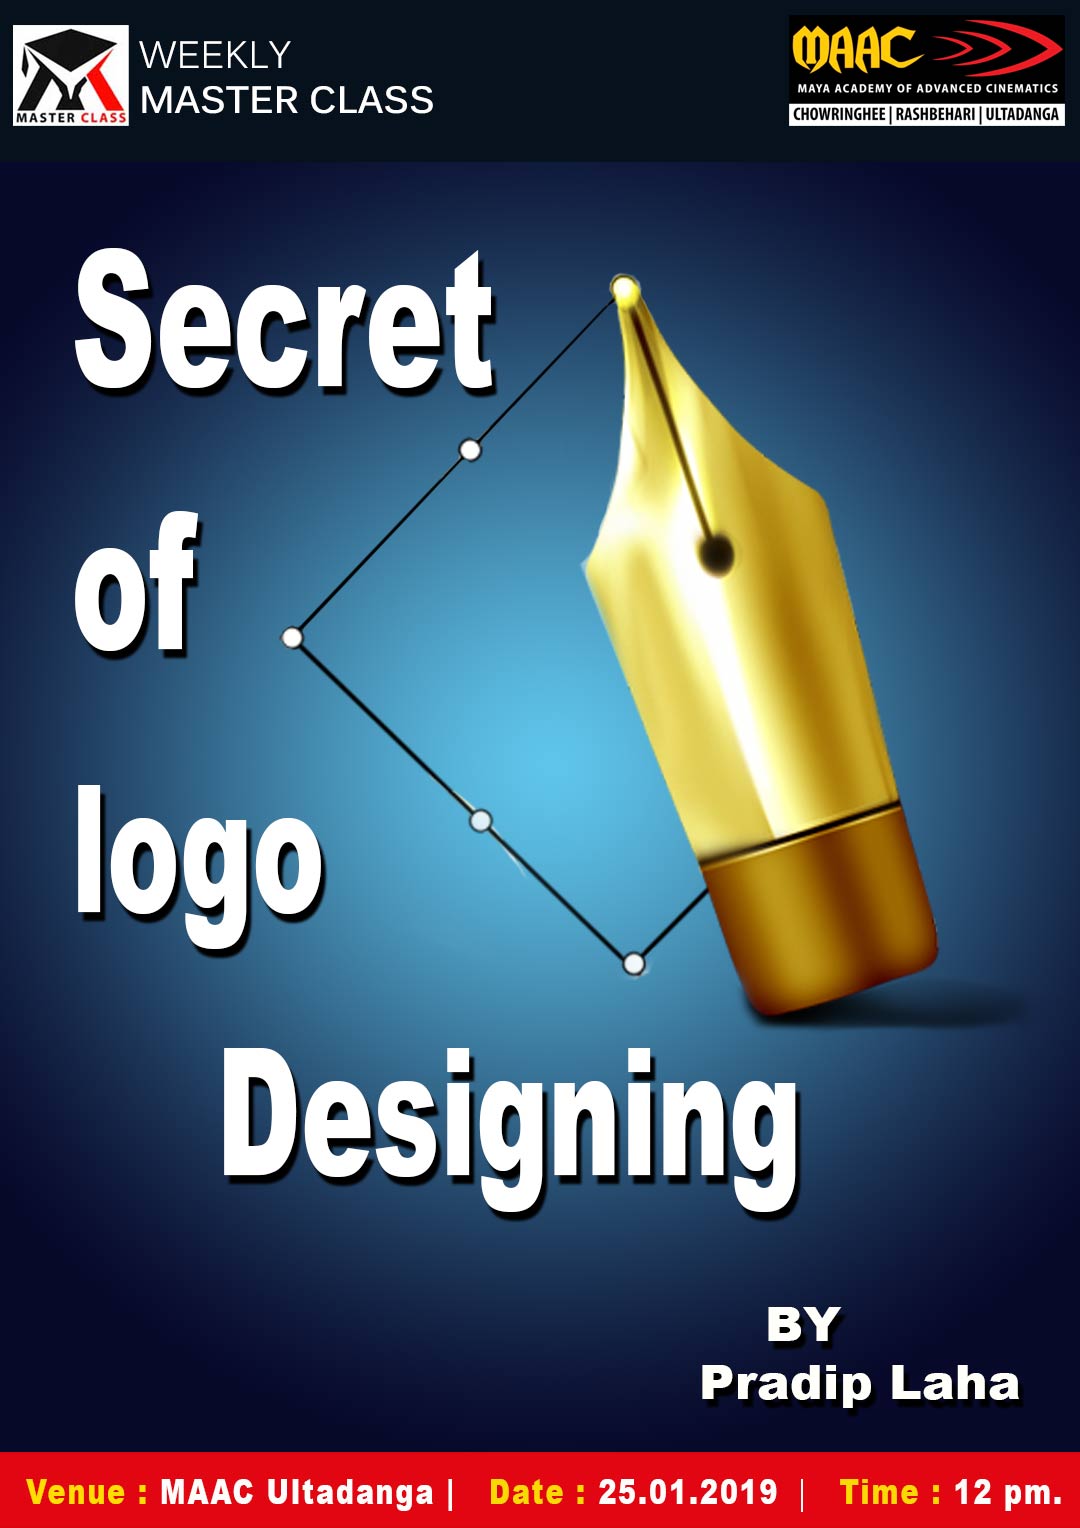 Weekly Master Class on Secret of Logo Designing